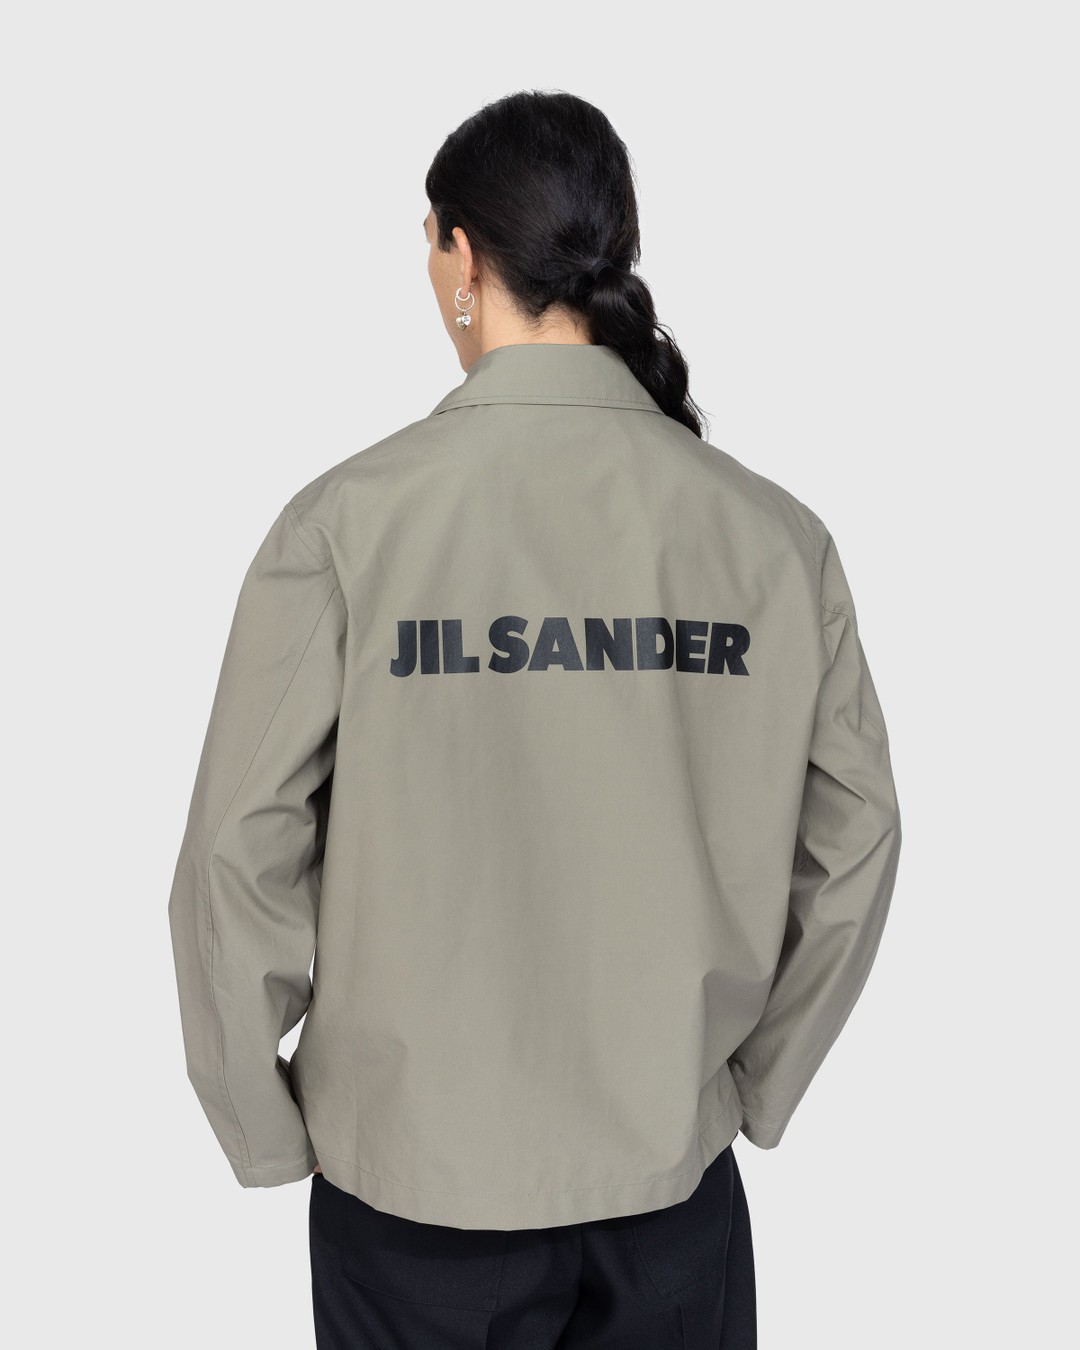 Jil Sander – Logo Jacket Medium Green - Outerwear - Green - Image 3